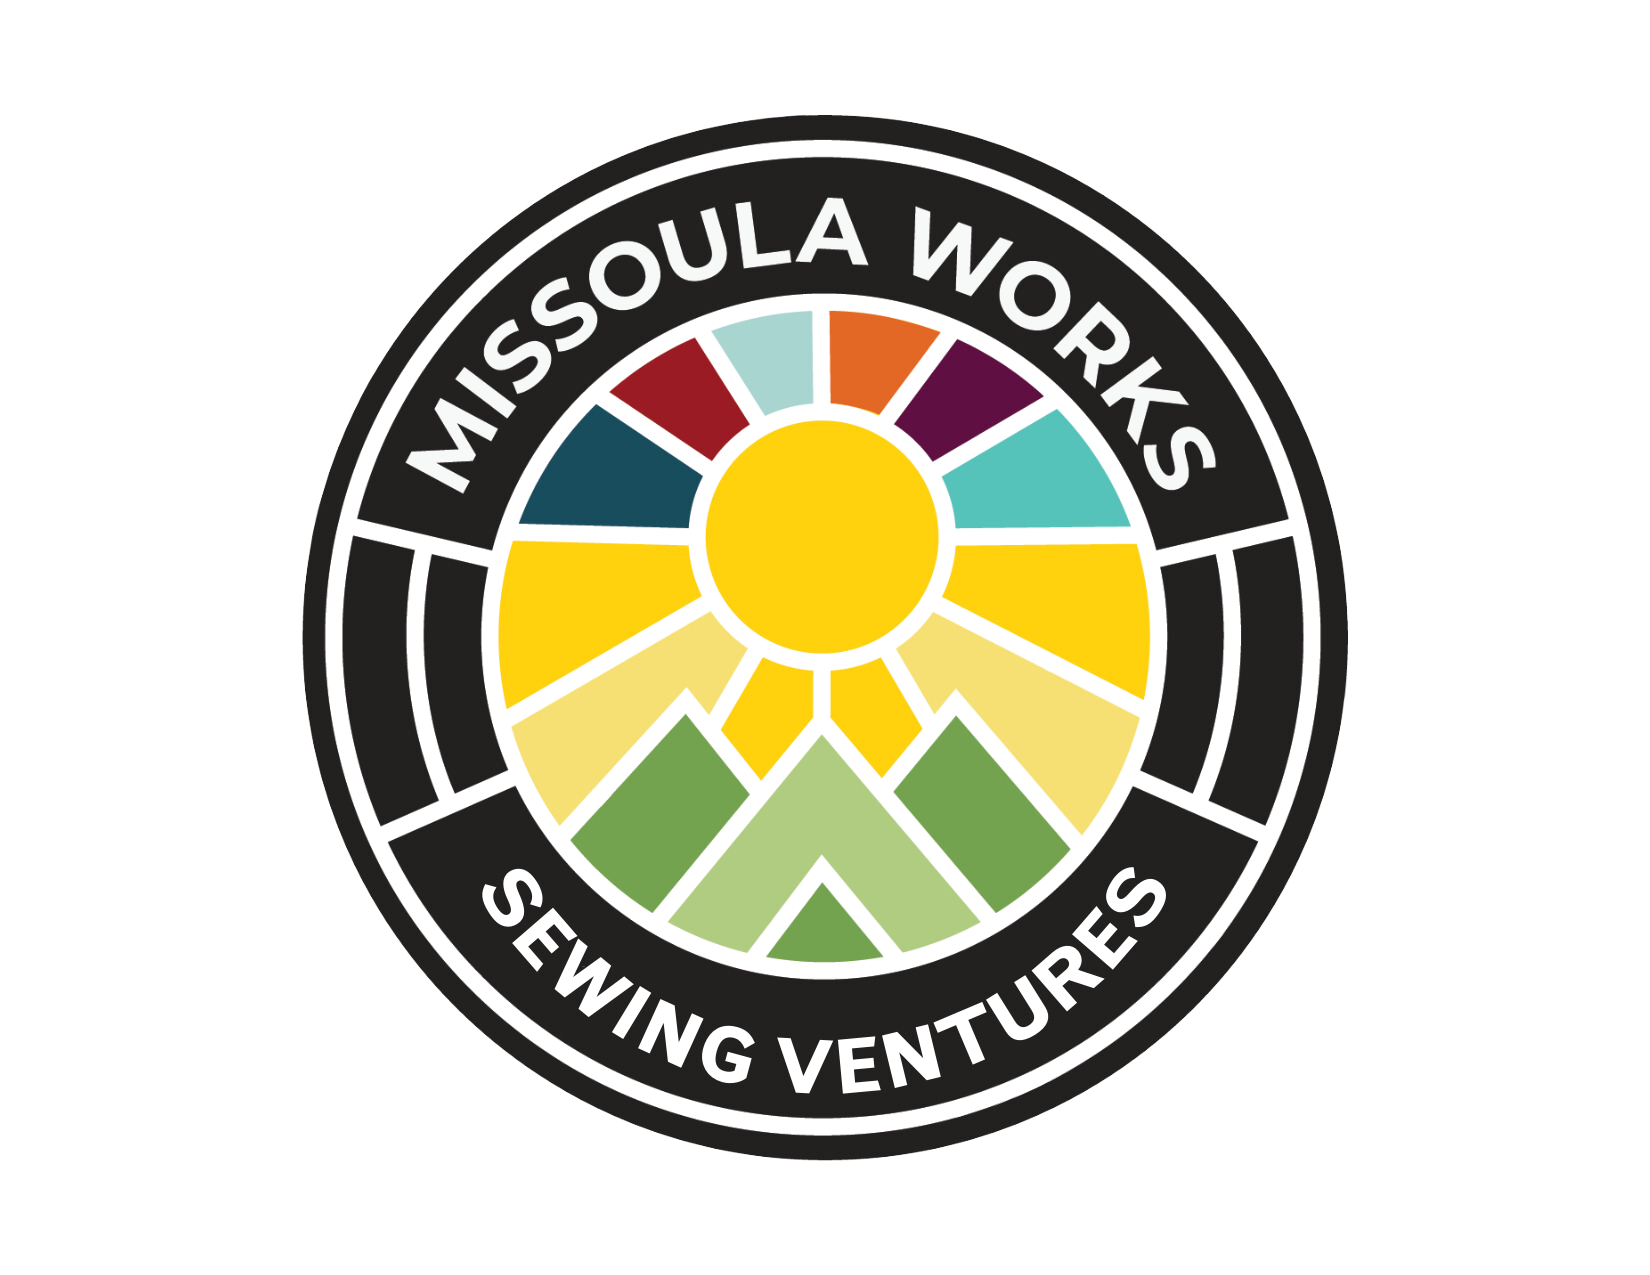 Missoula Works Sewing Ventures